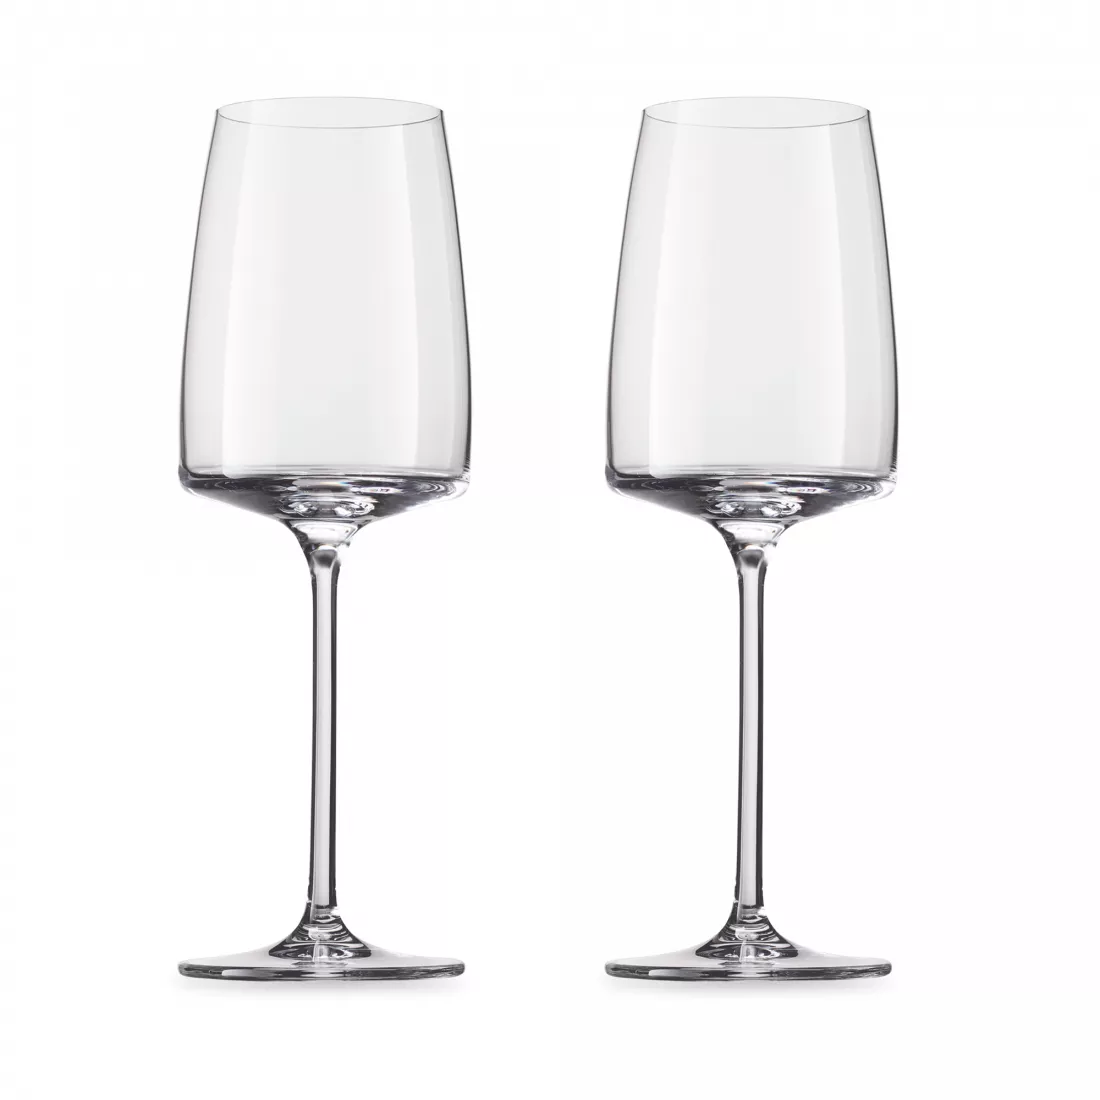 ZWIESEL GLAS Набор бокалов для вина Light & Fresh, объем 363 мл, 2 шт., серия Vivid Senses